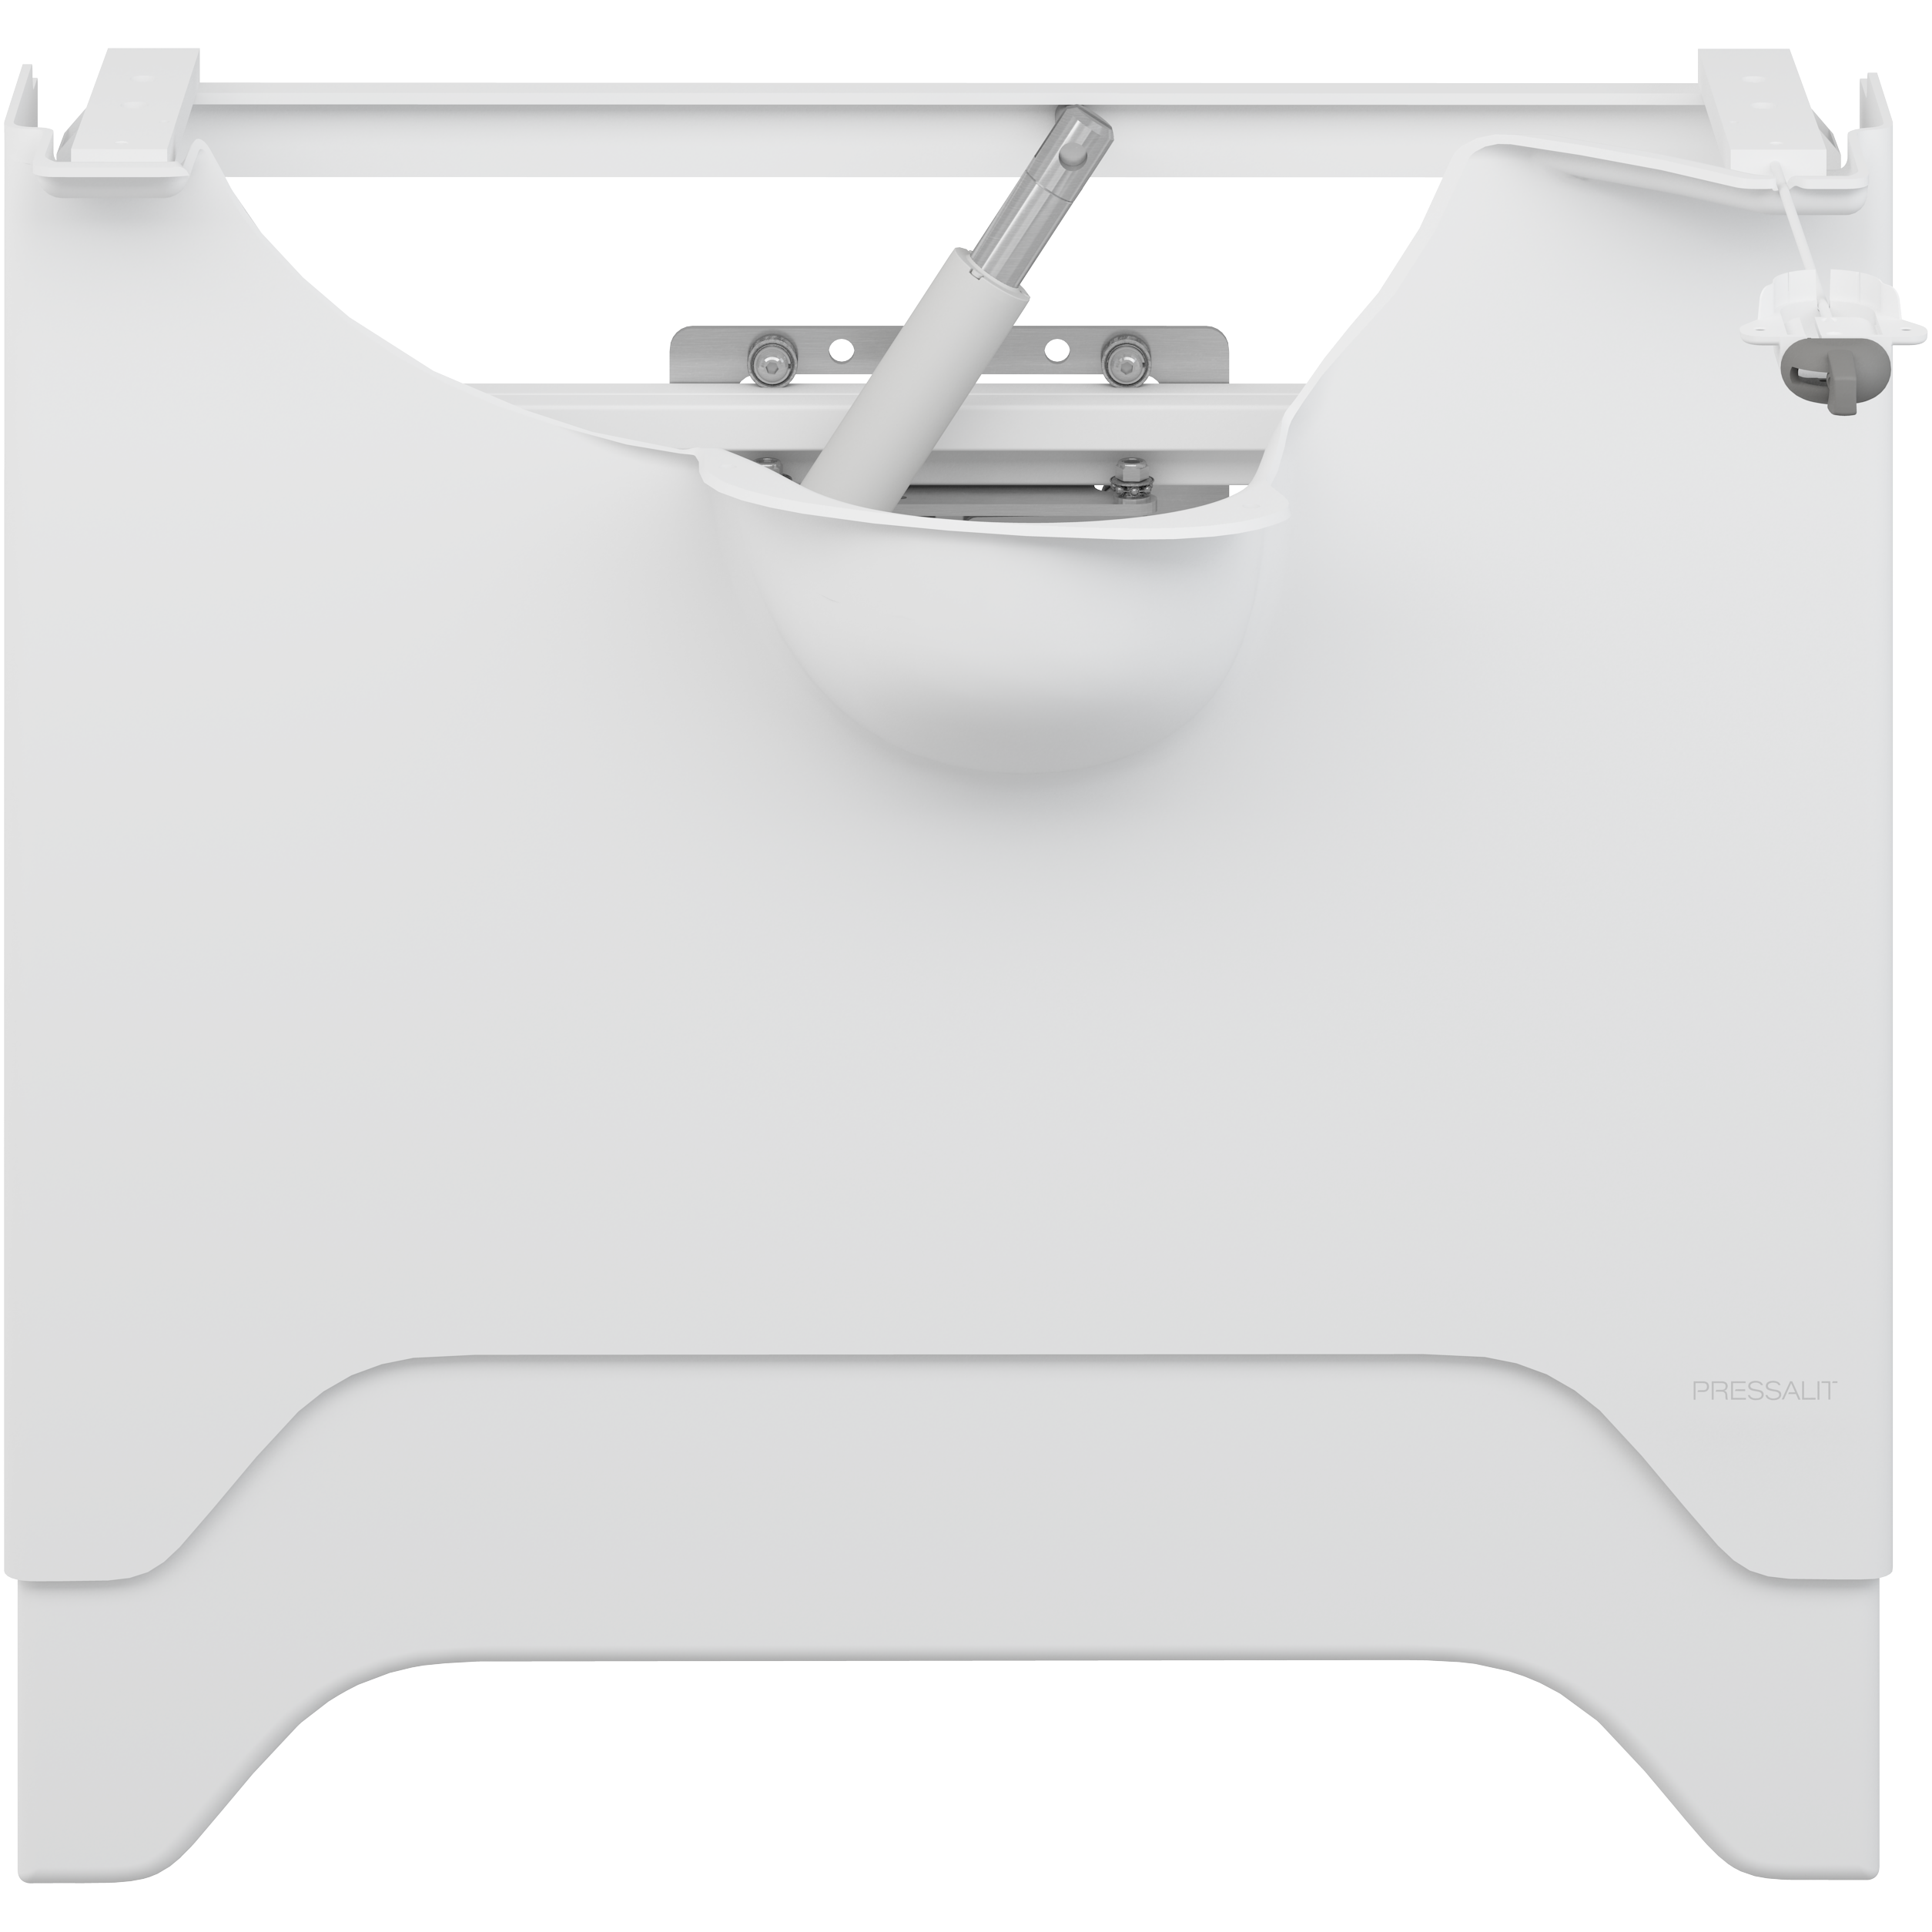 MATRIX powered basin unit, left-facing, height and sideways adjustable